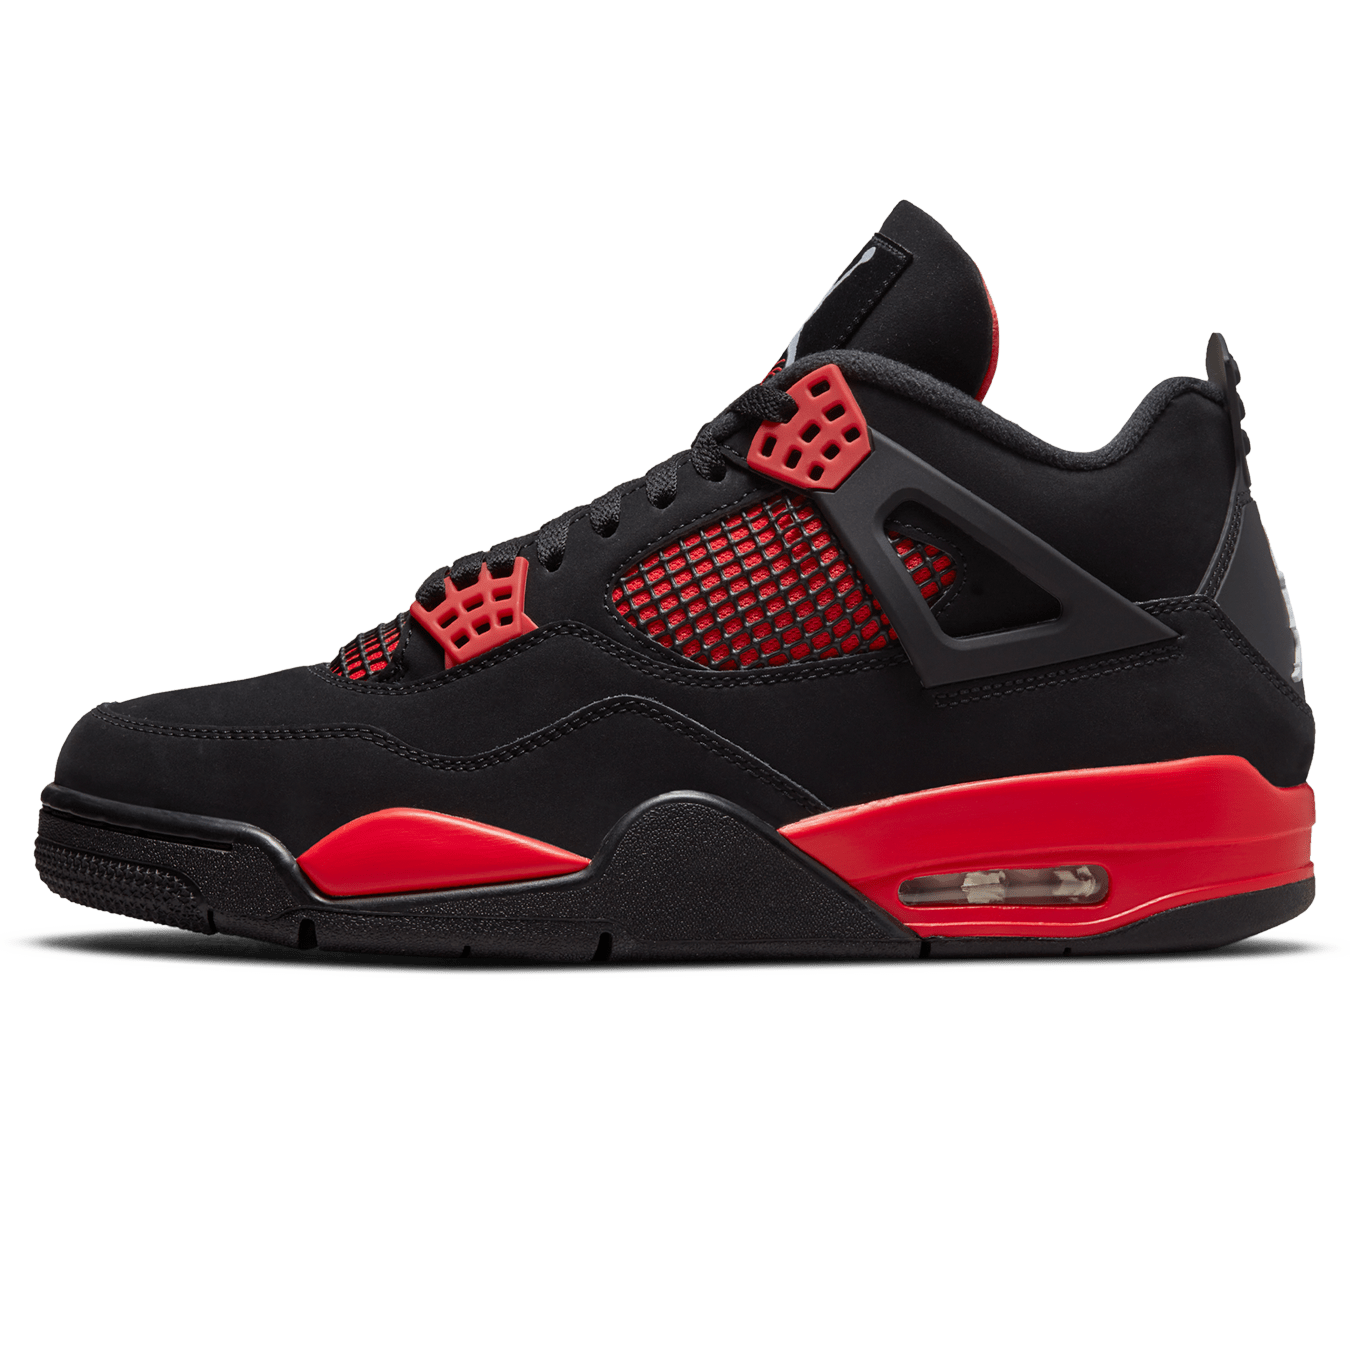 Louis Vuitton Basketball Air Jordan 13 Shoes Full Color Black